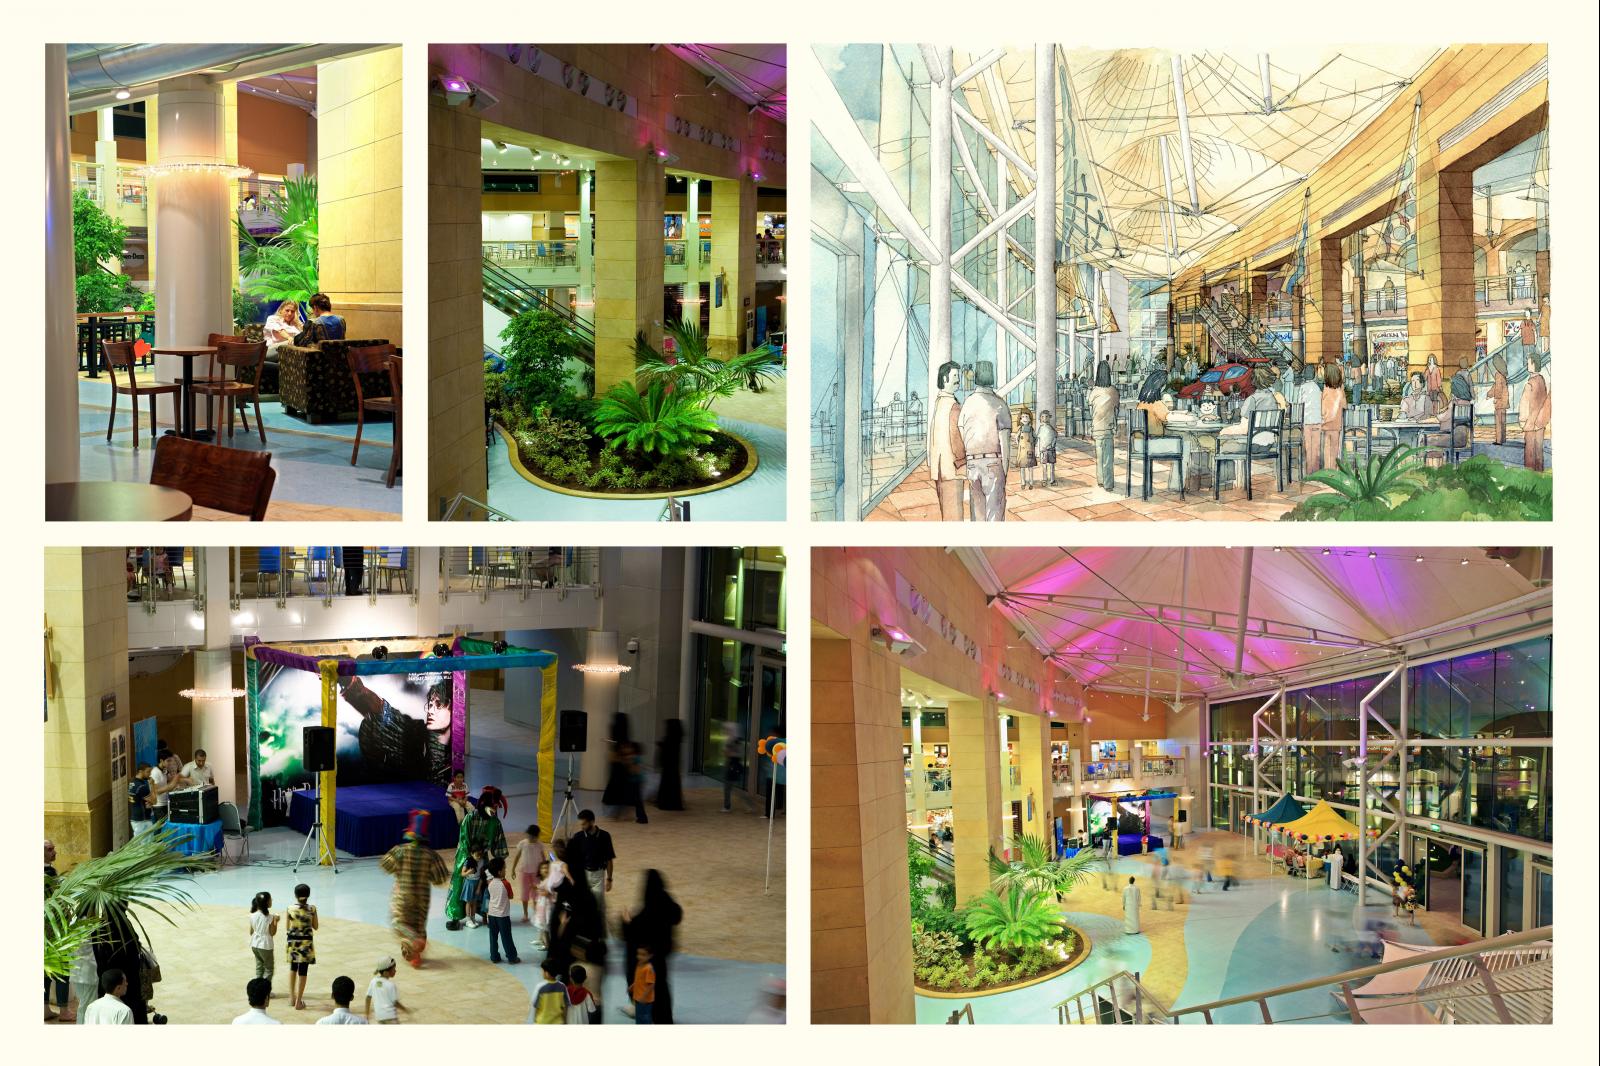 Al-Manshar Shopping Center - Architecture